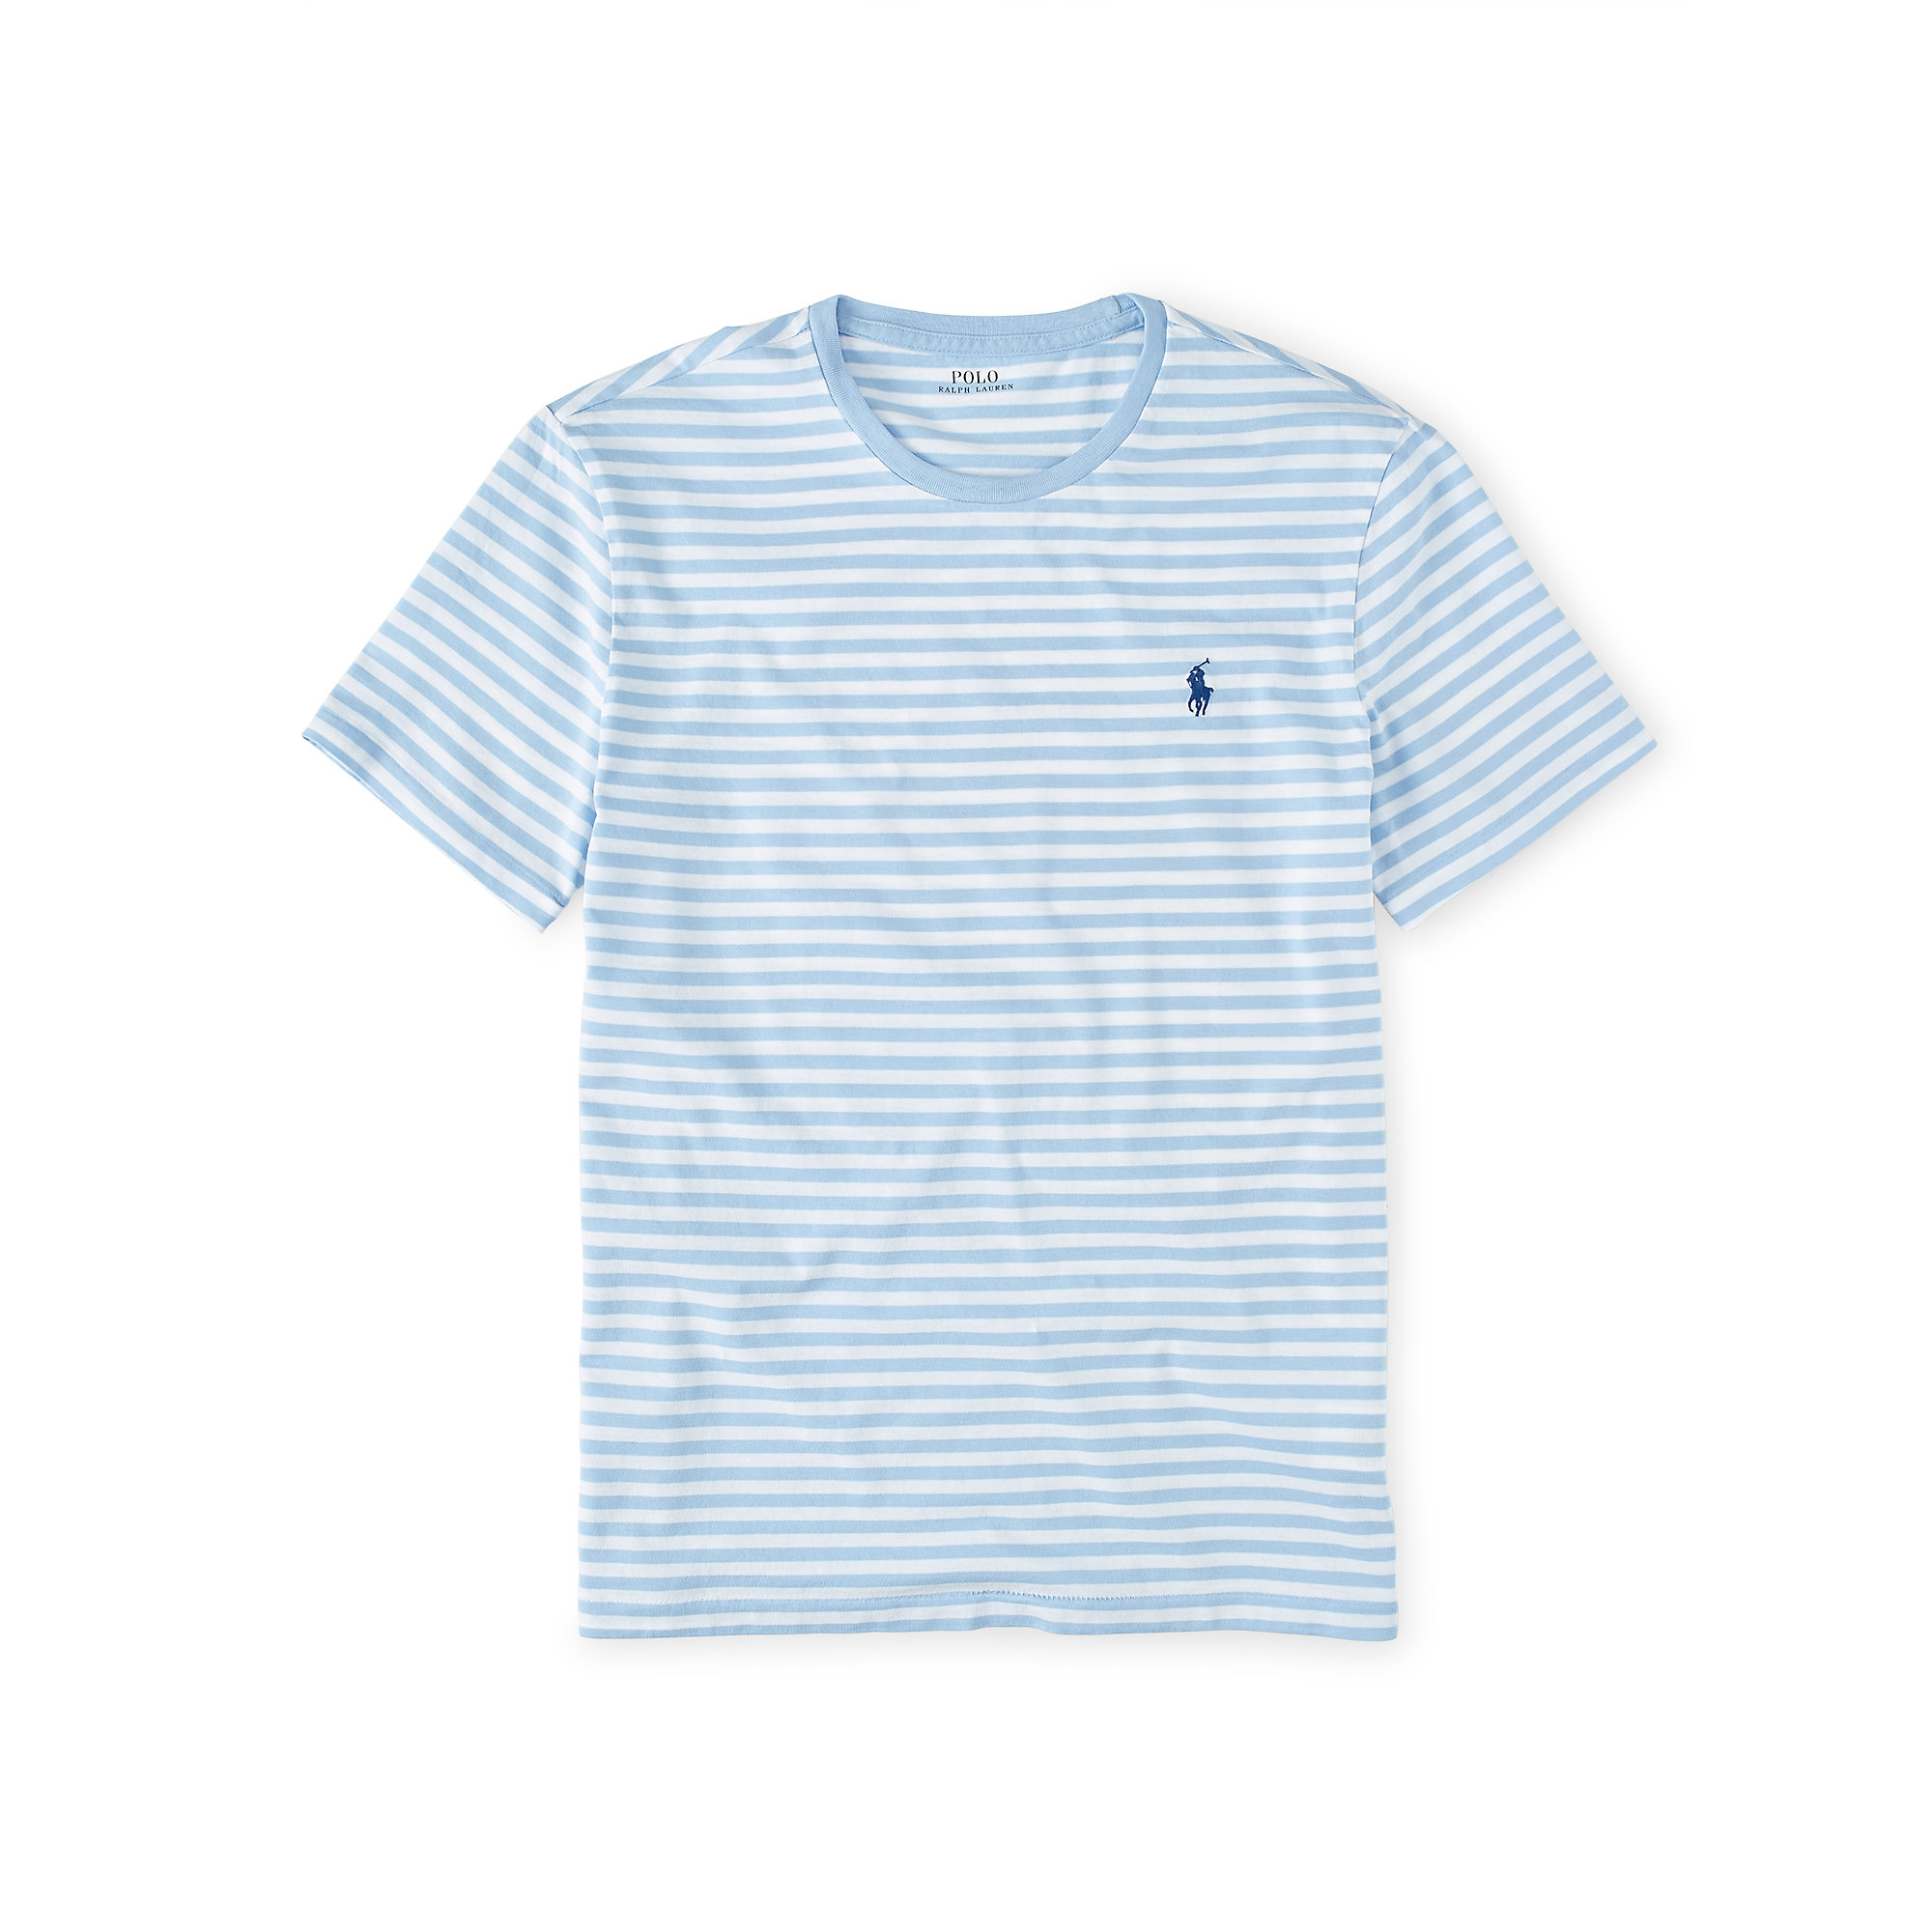 Polo Ralph Lauren Custom-fit Striped T-shirt in Blue for Men - Lyst